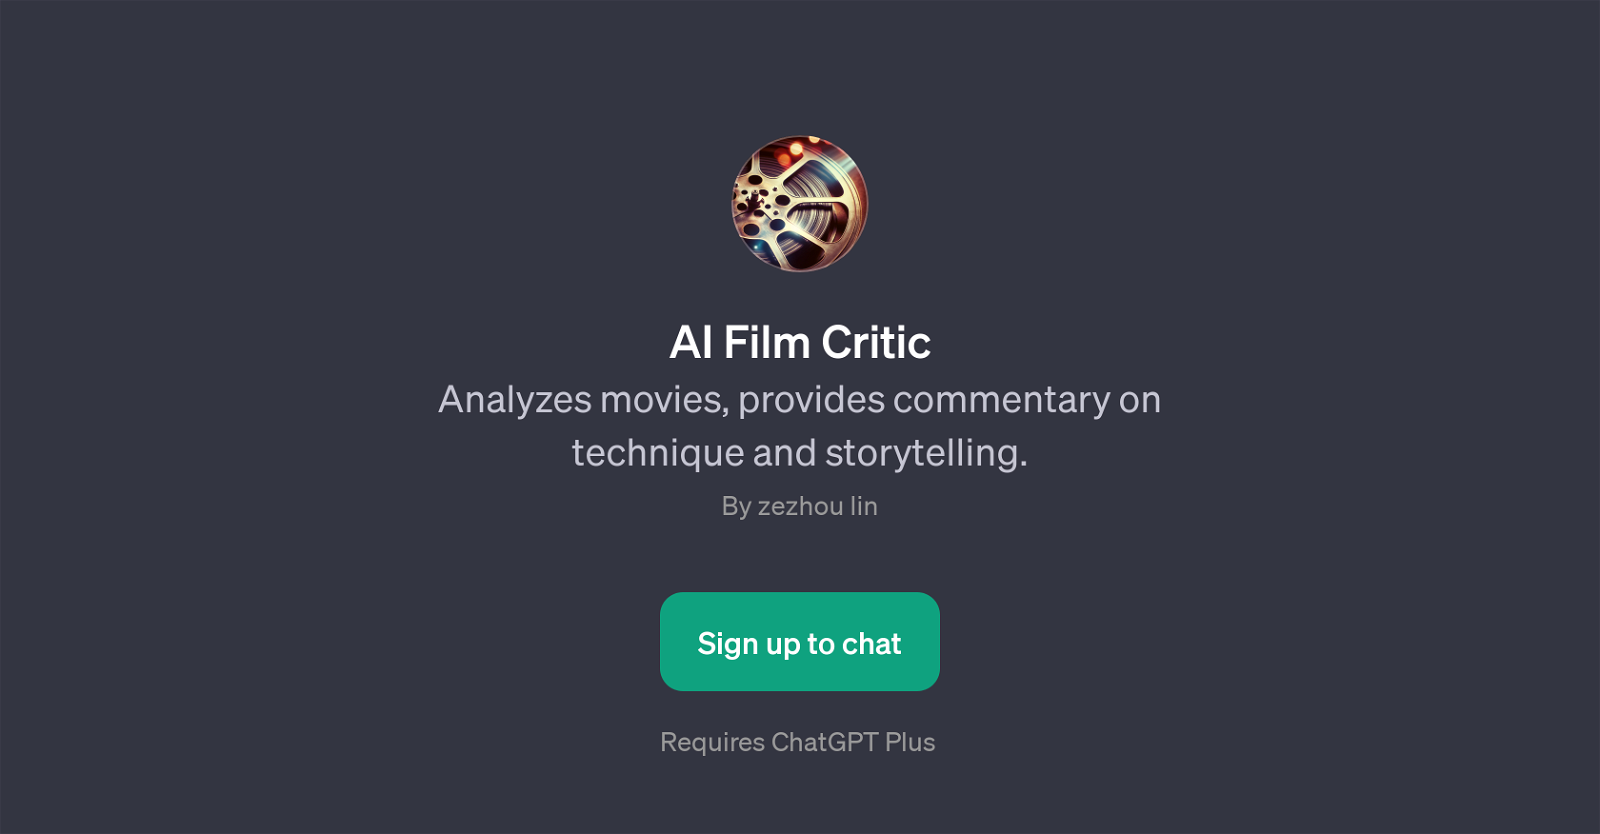 AI Film Critic website